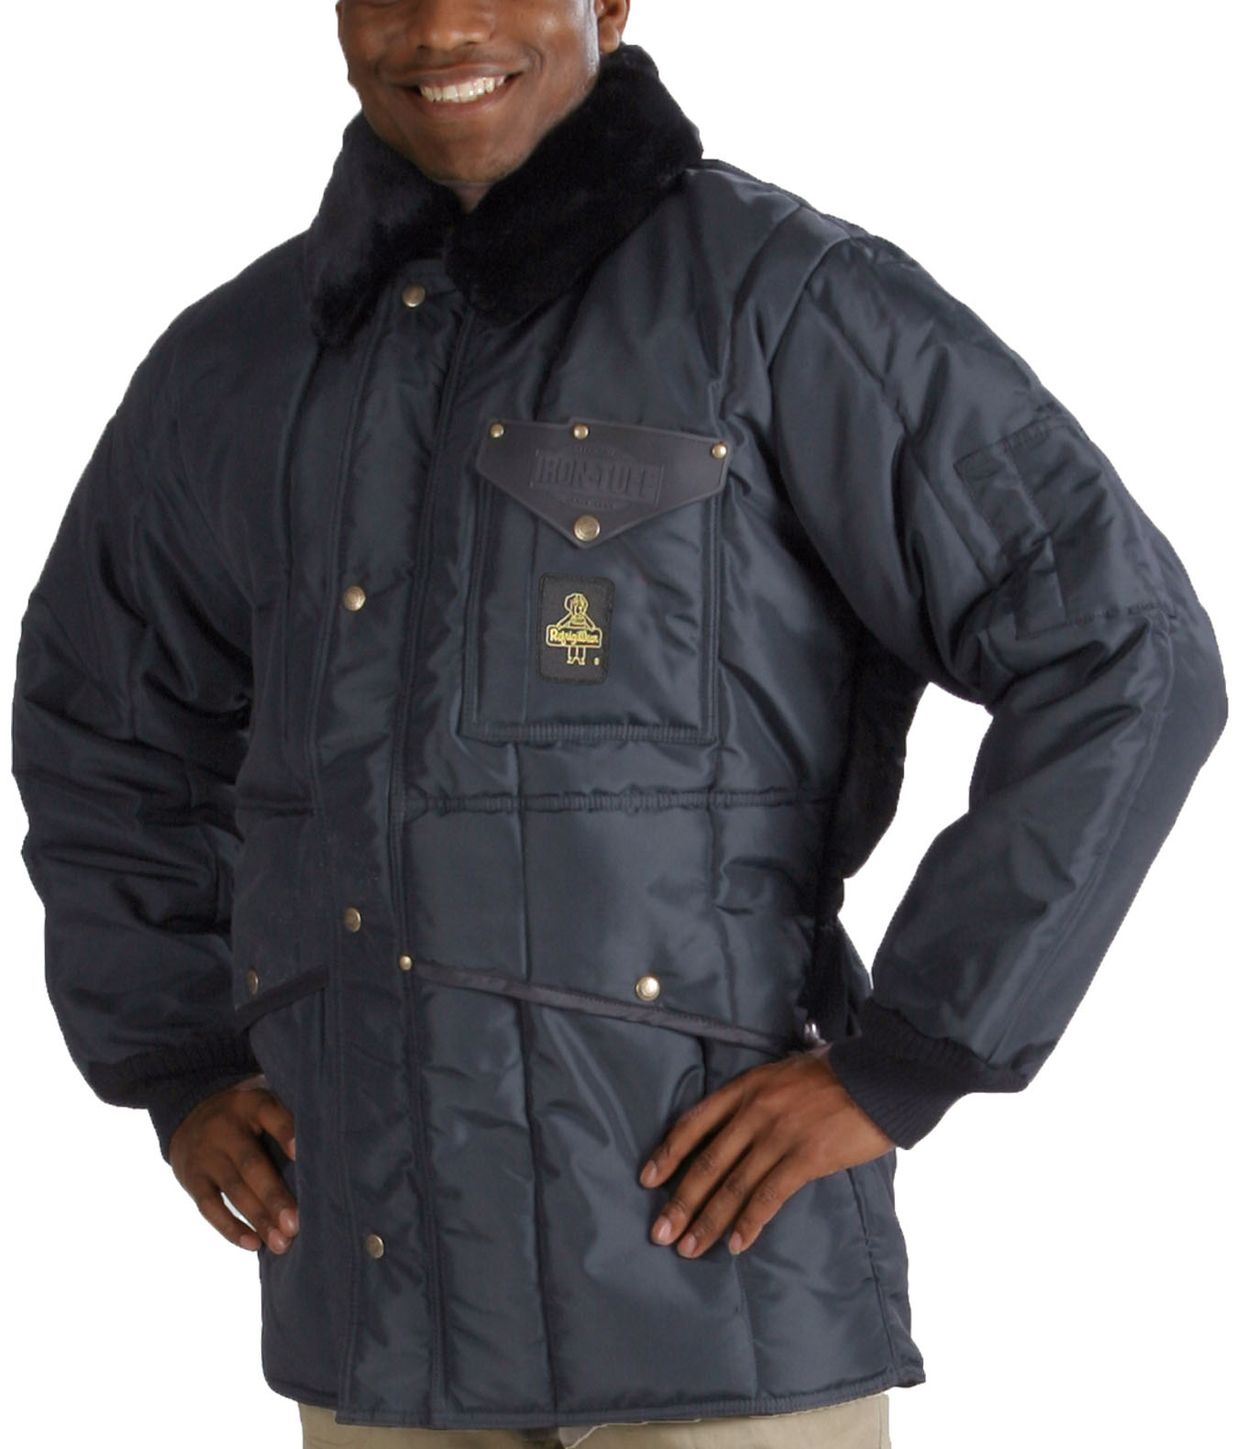 RefrigiWear 0342 Iron-Tuff Jackoat Cold Weather Work Coat